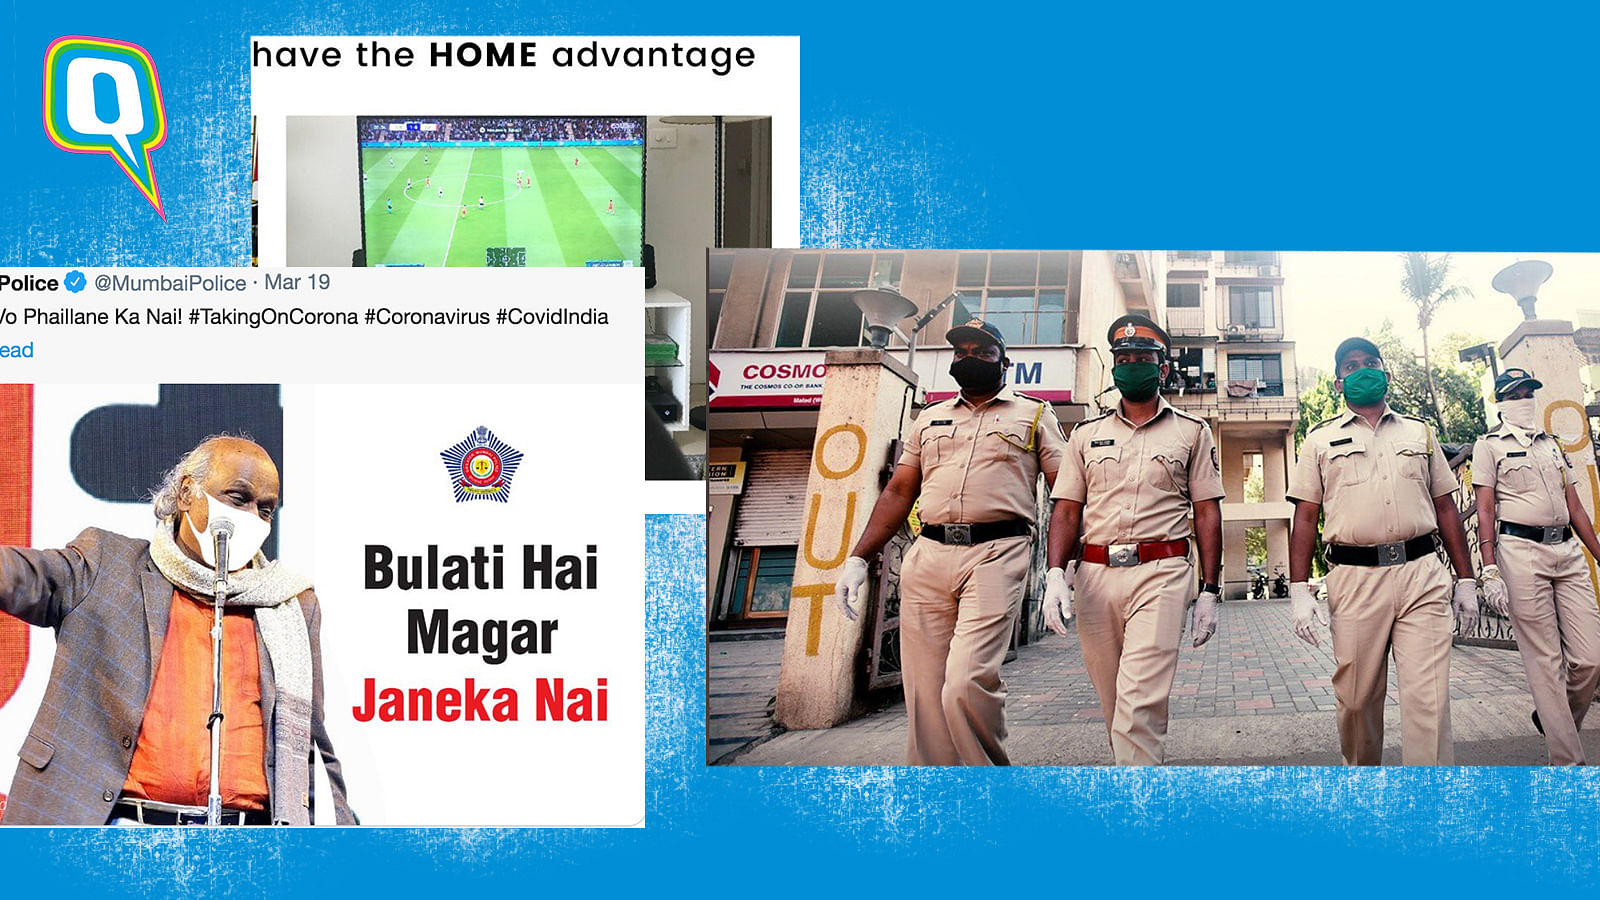 Mumbai Police uses funny memes to educate people on COVID-19